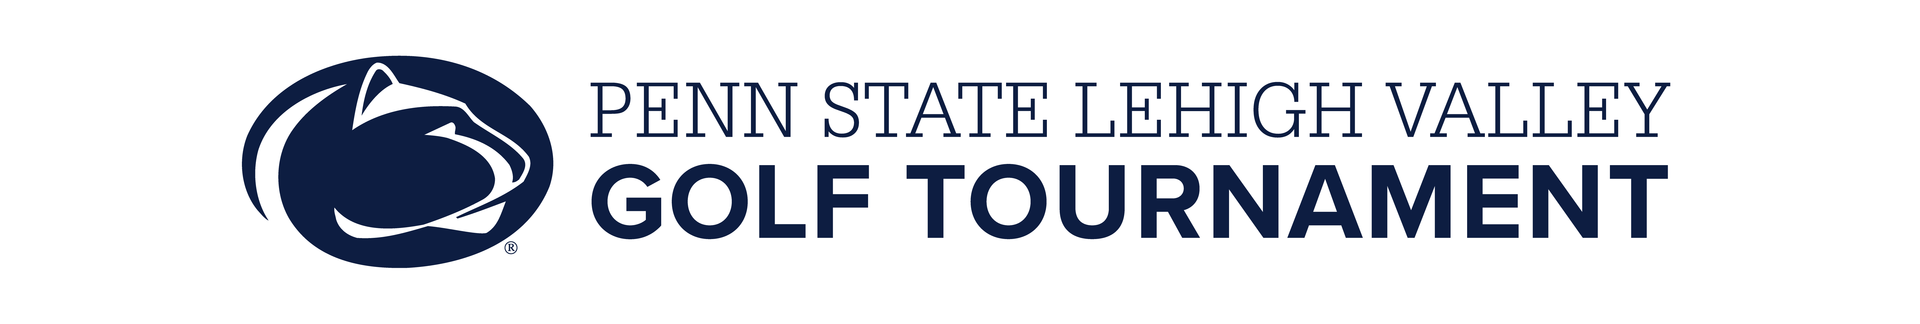 Penn State Lehigh Valley Golf Tournament